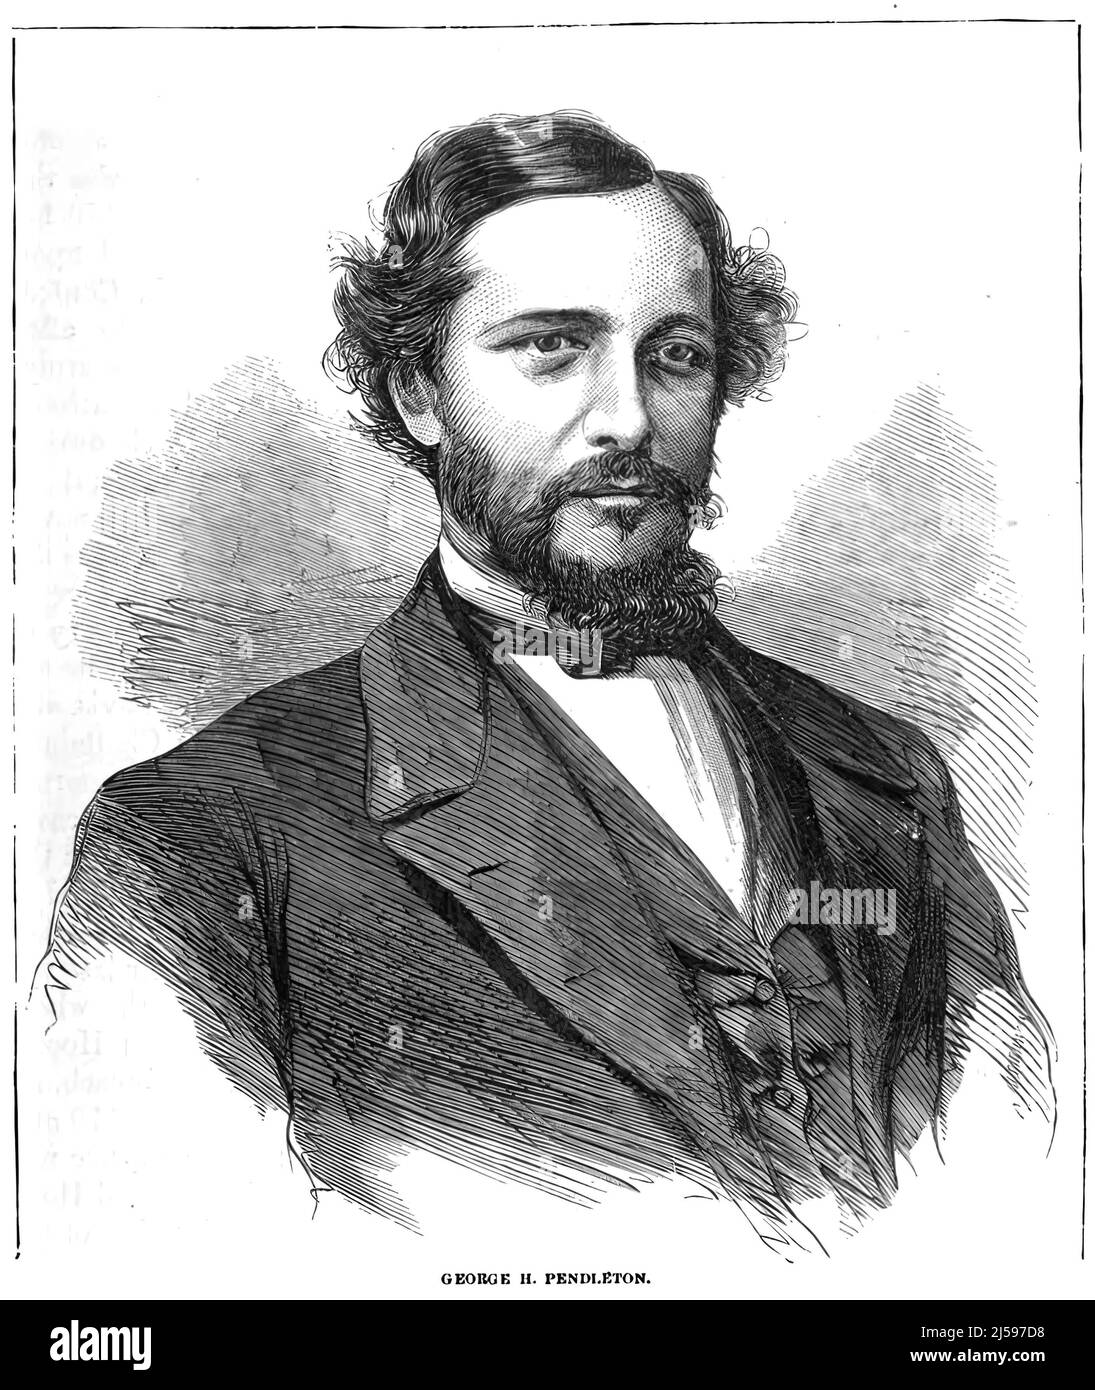 Portrait of George Hunt Pendleton, Congressman and Senator from Ohio, and 1864 Democratic nominee for Vice President. 19th century illustration Stock Photo